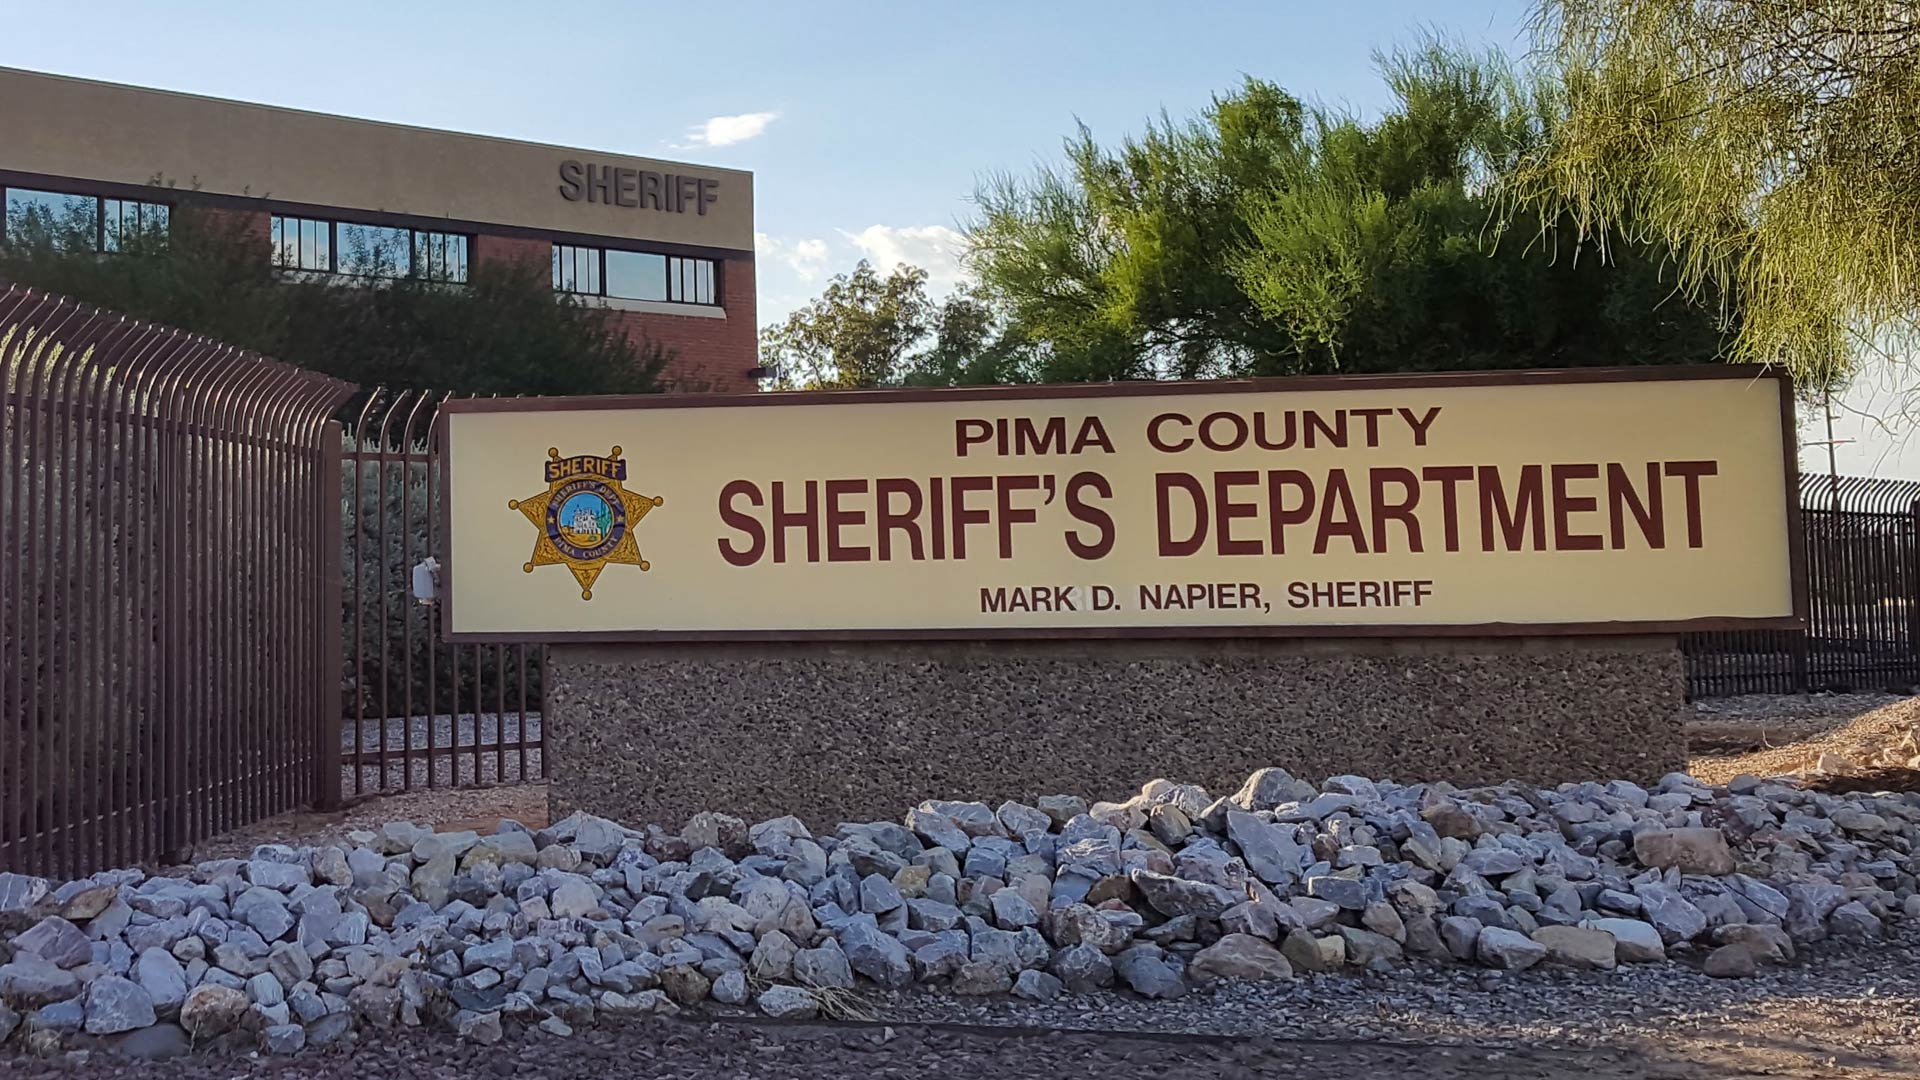 The Pima County Sheriff's headquarters on E. Benson Highway.